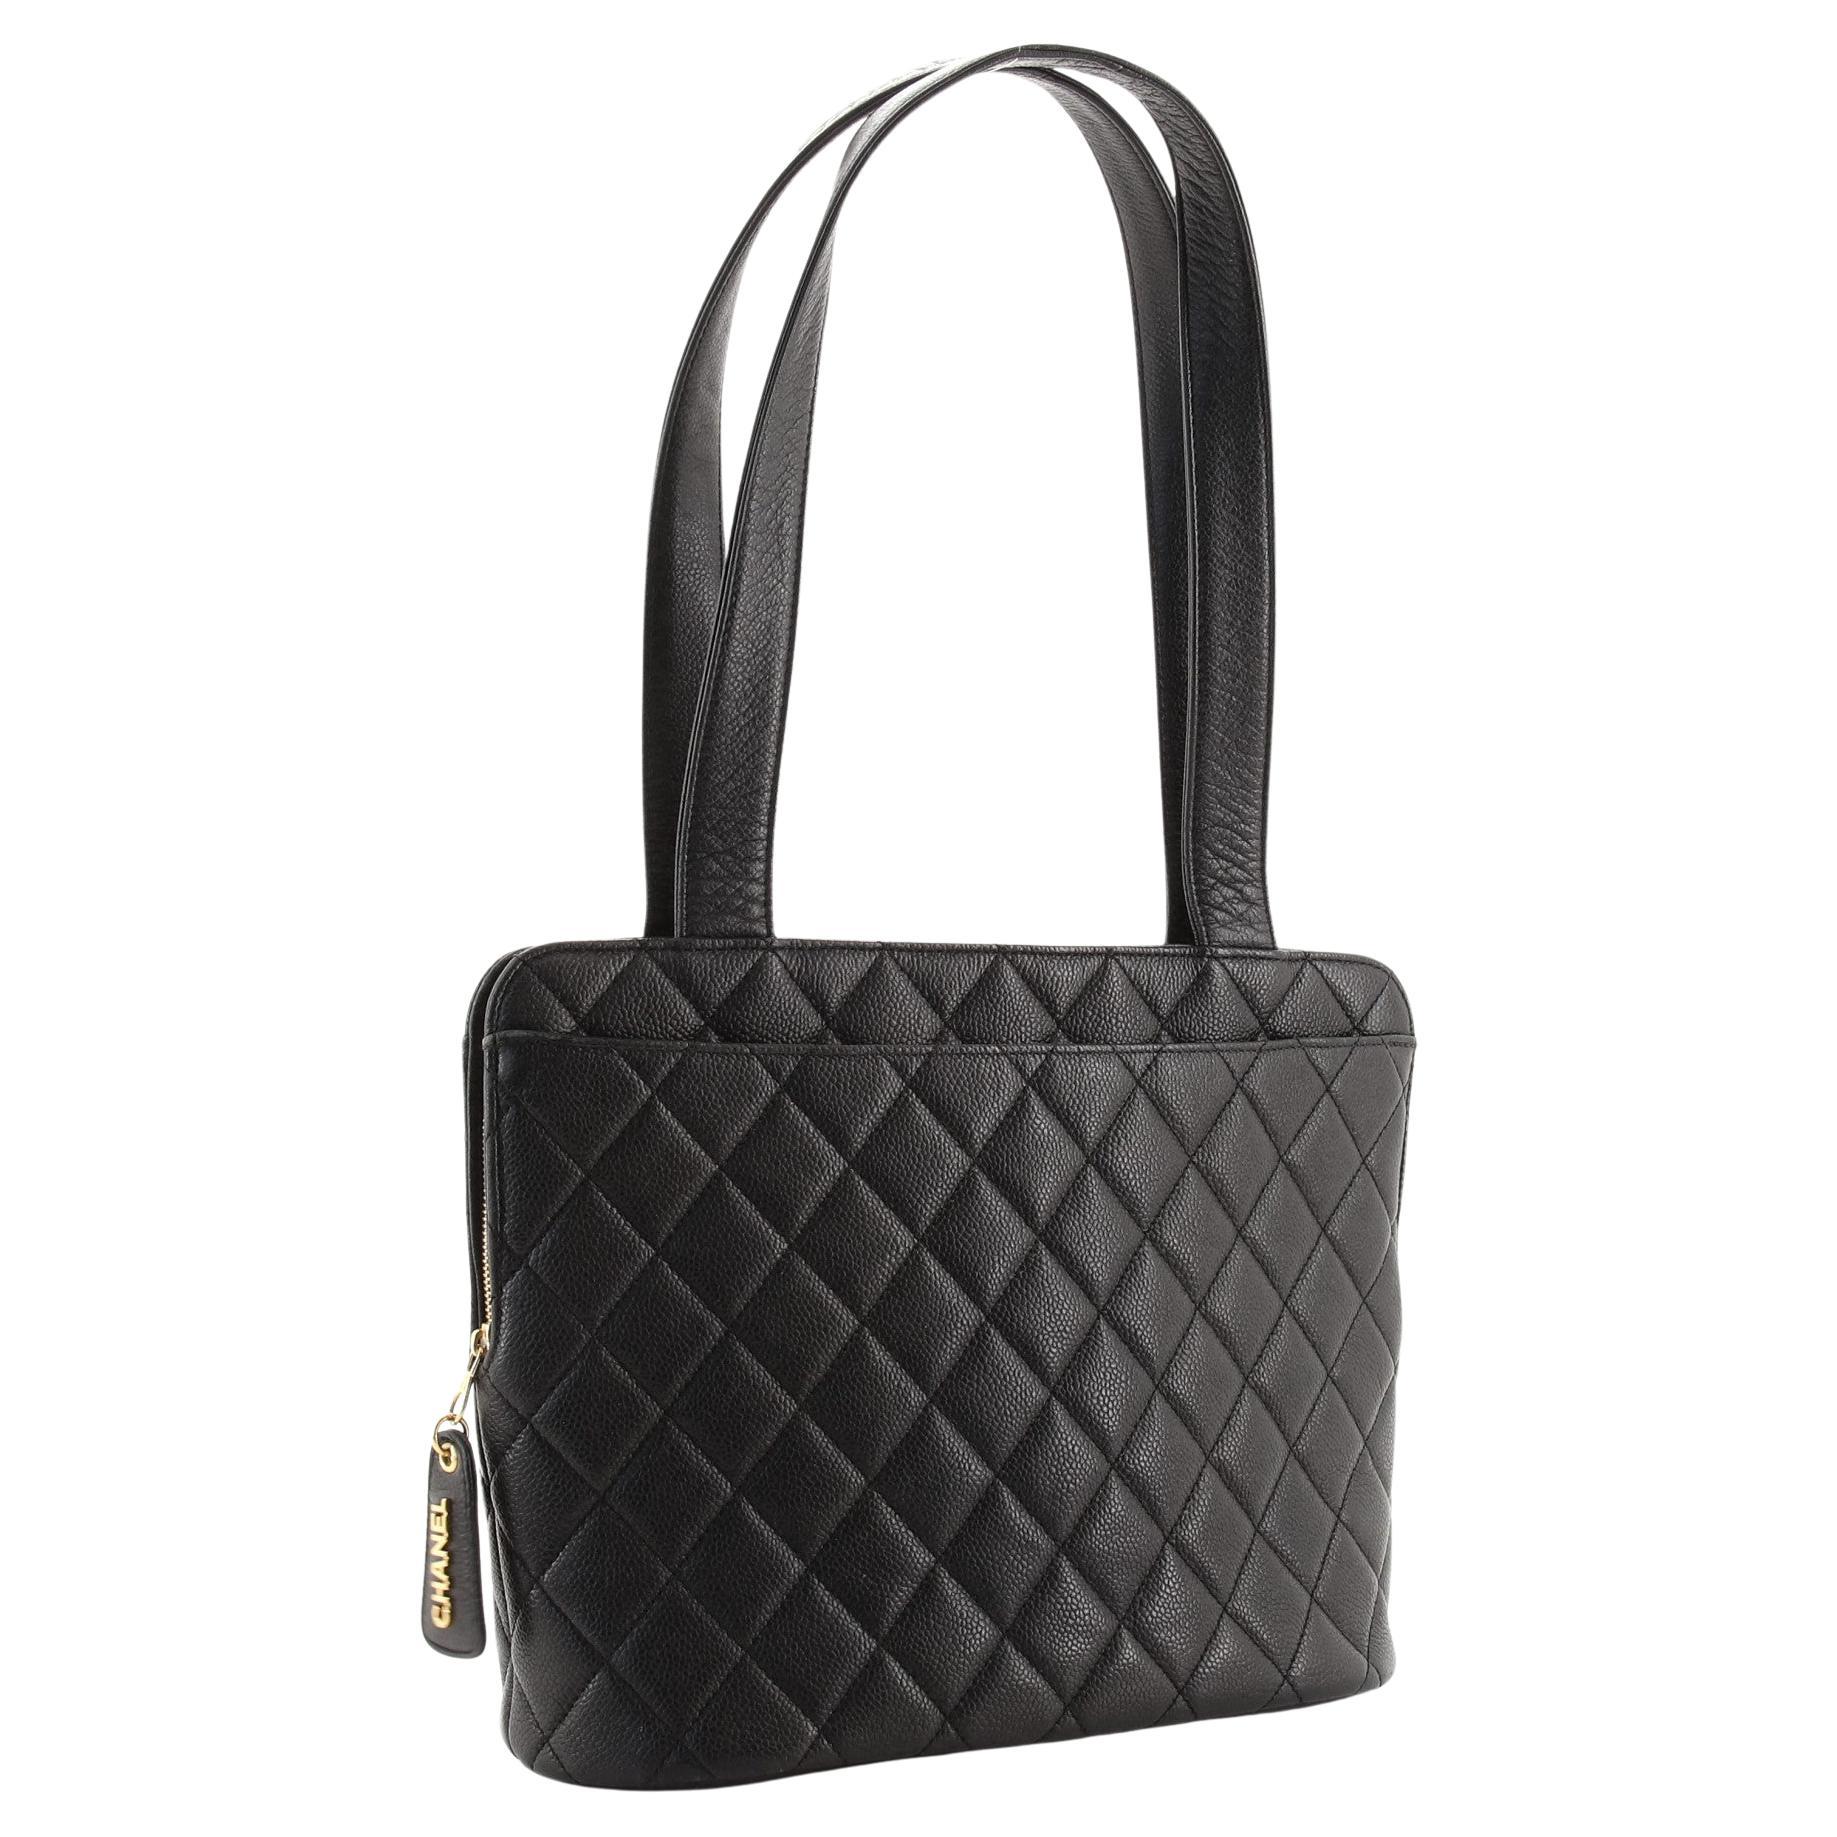 Chanel Vintage Black Quilted Caviar Leather Zip Chain Medium Shoulder Bag